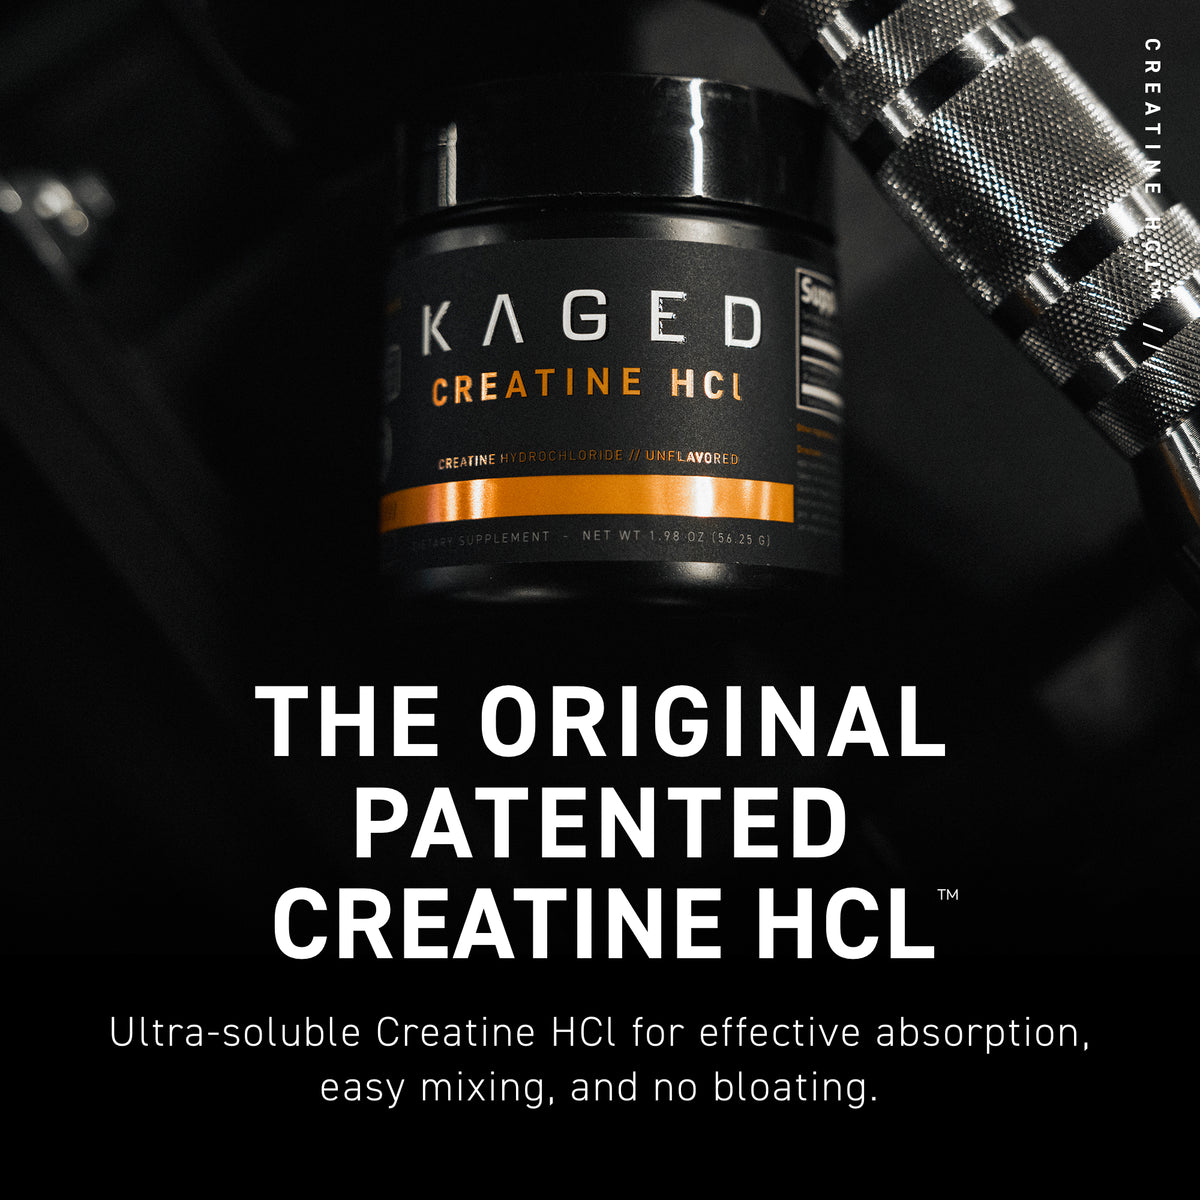 Creatine HCl